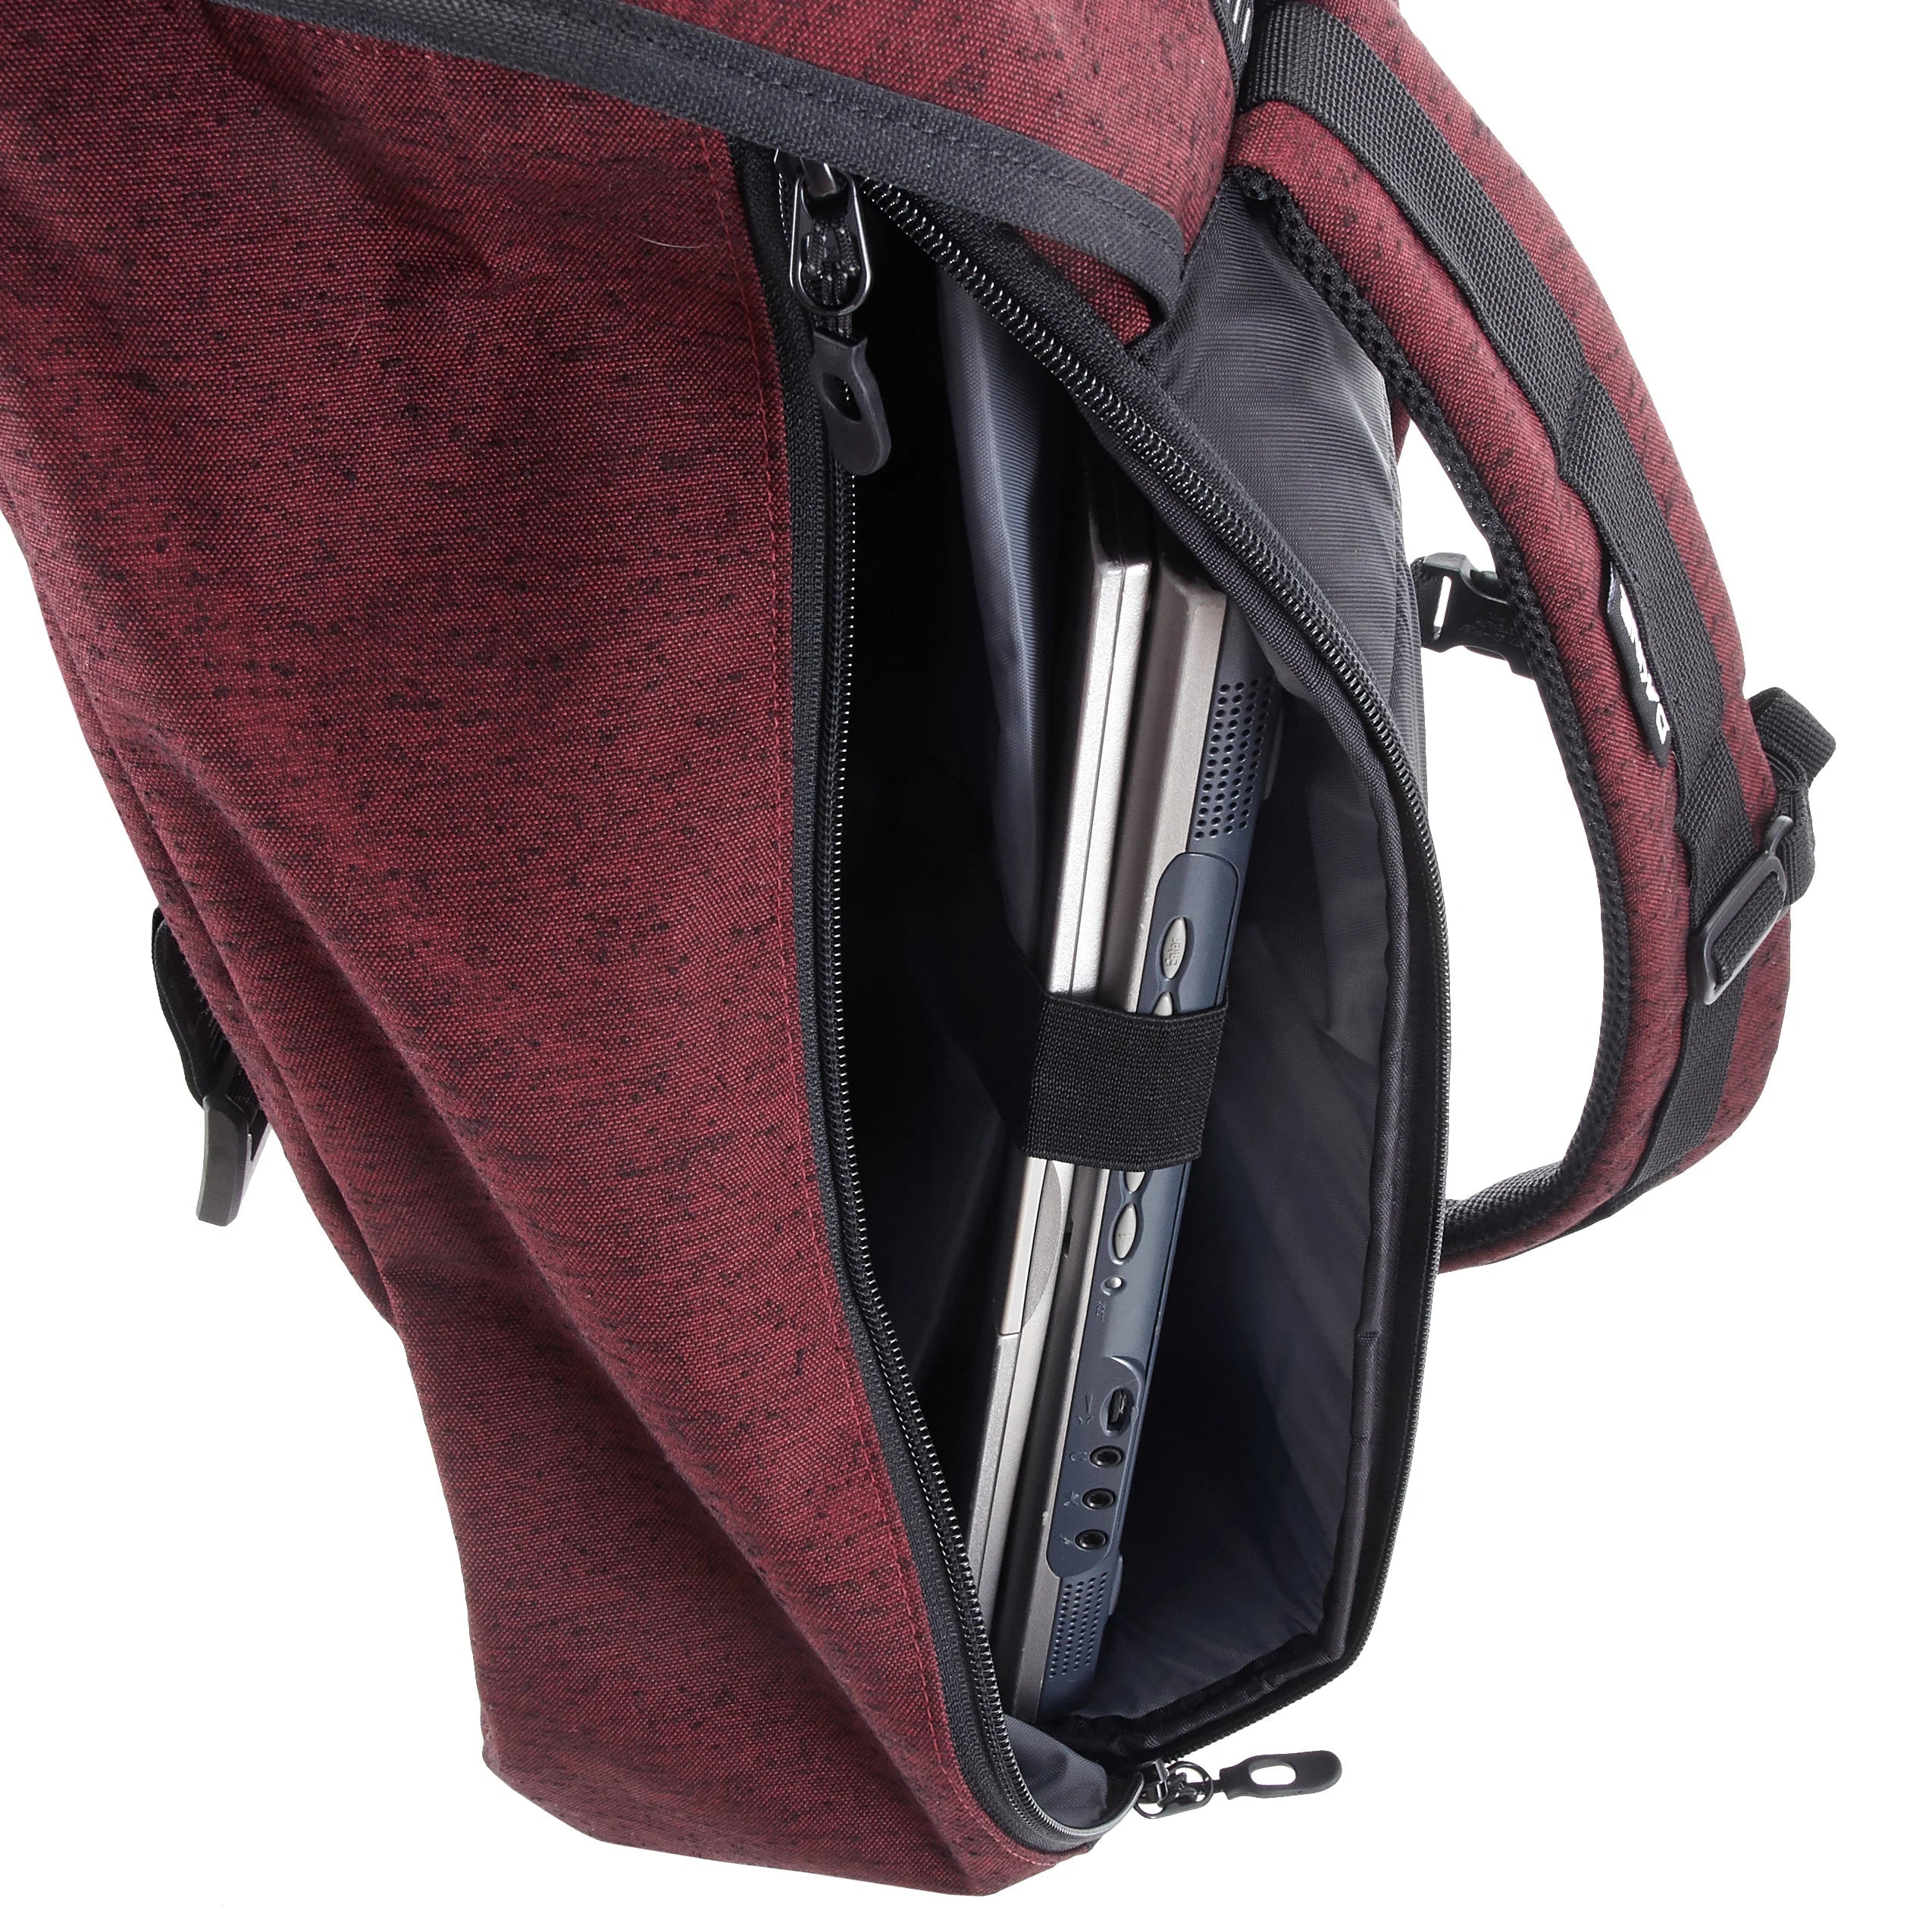 Dakine Boys Packs Trek II Backpack 51 cm - slate